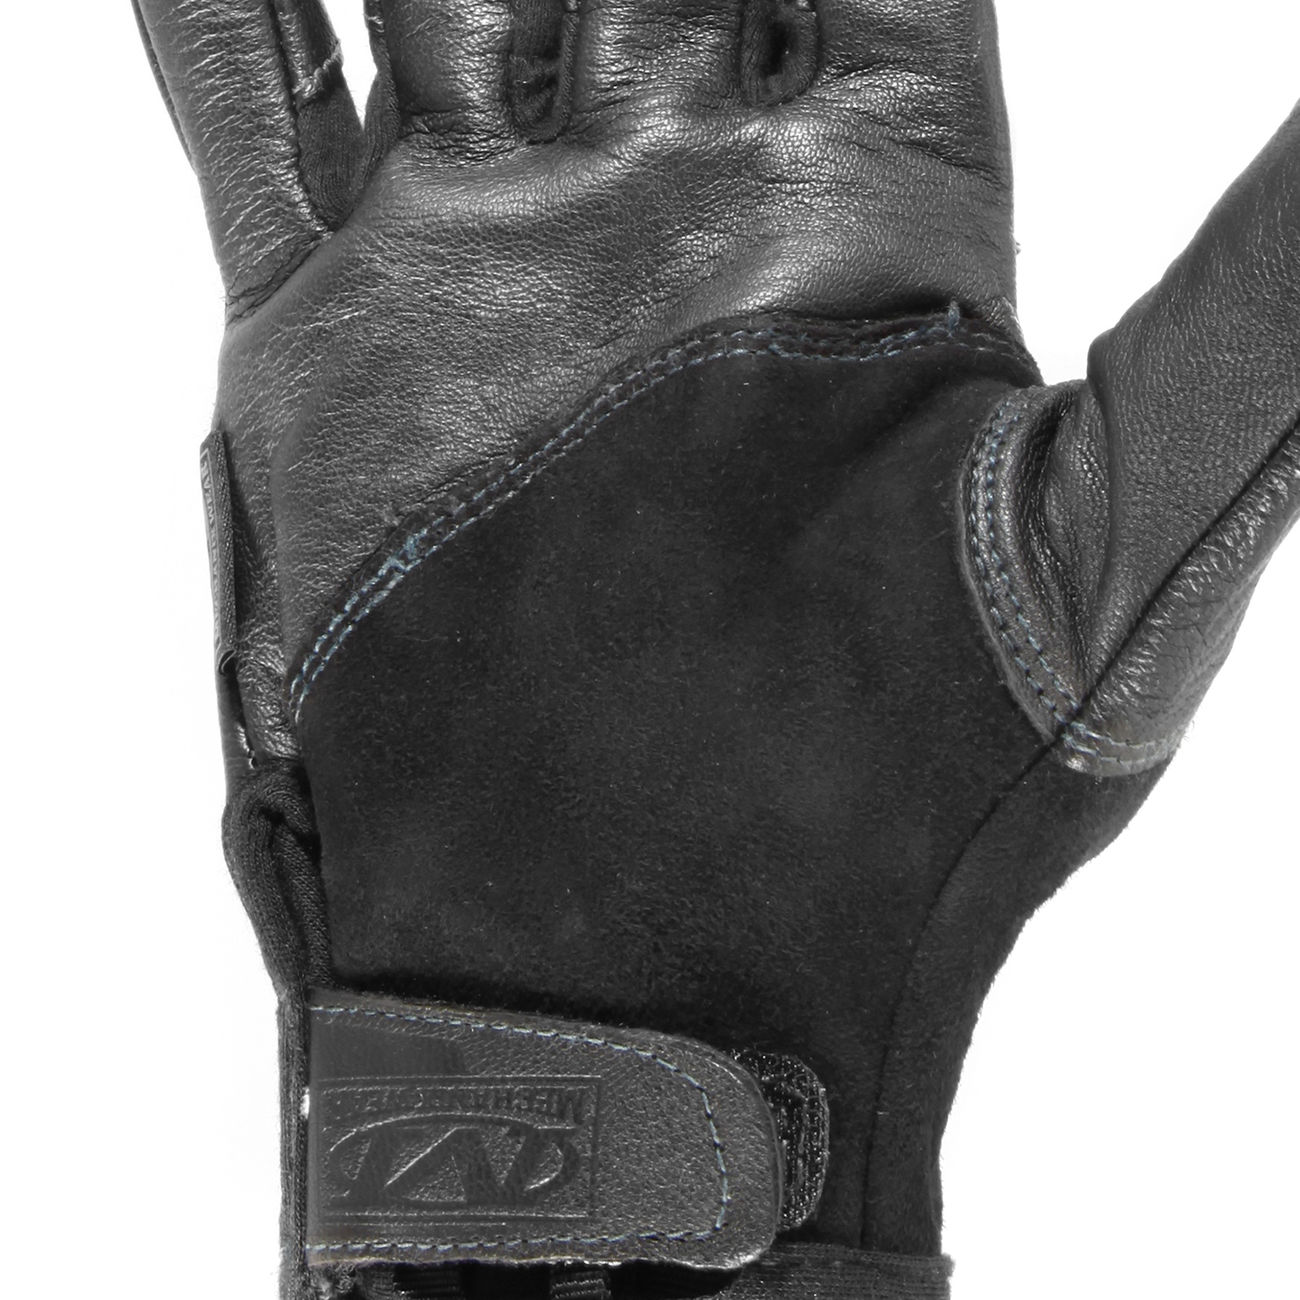 Mechanix Wear Handschuhe Tempest FR Nomex schwarz Bild 1